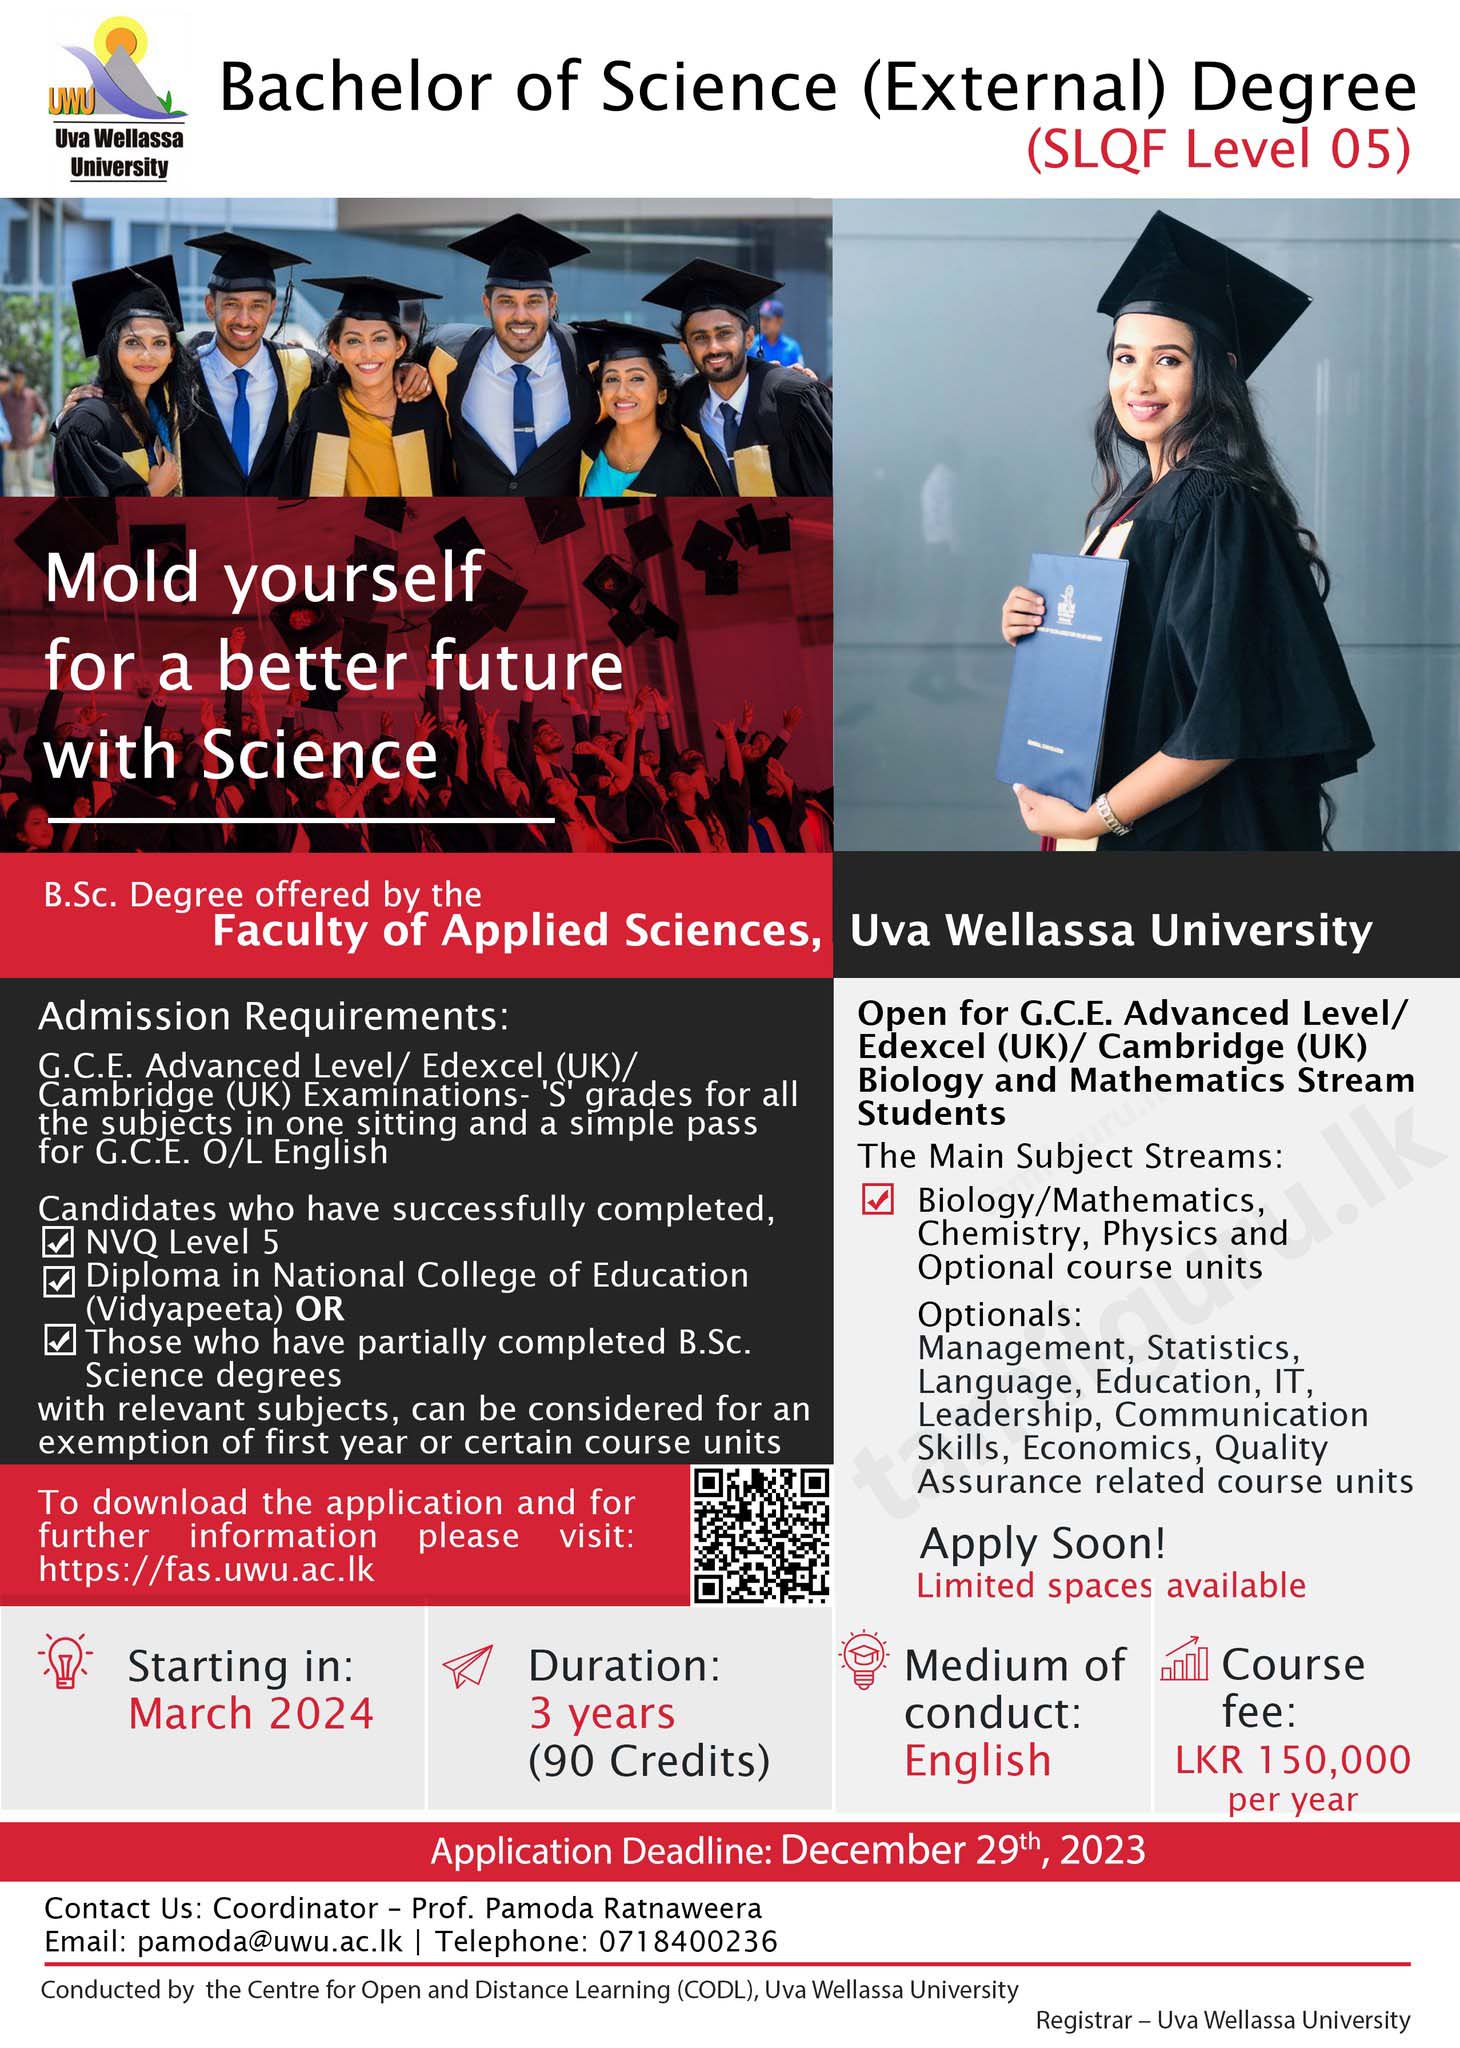 Bachelor of Science (BSc) External Degree Programme 2023 - Uva Wellassa University